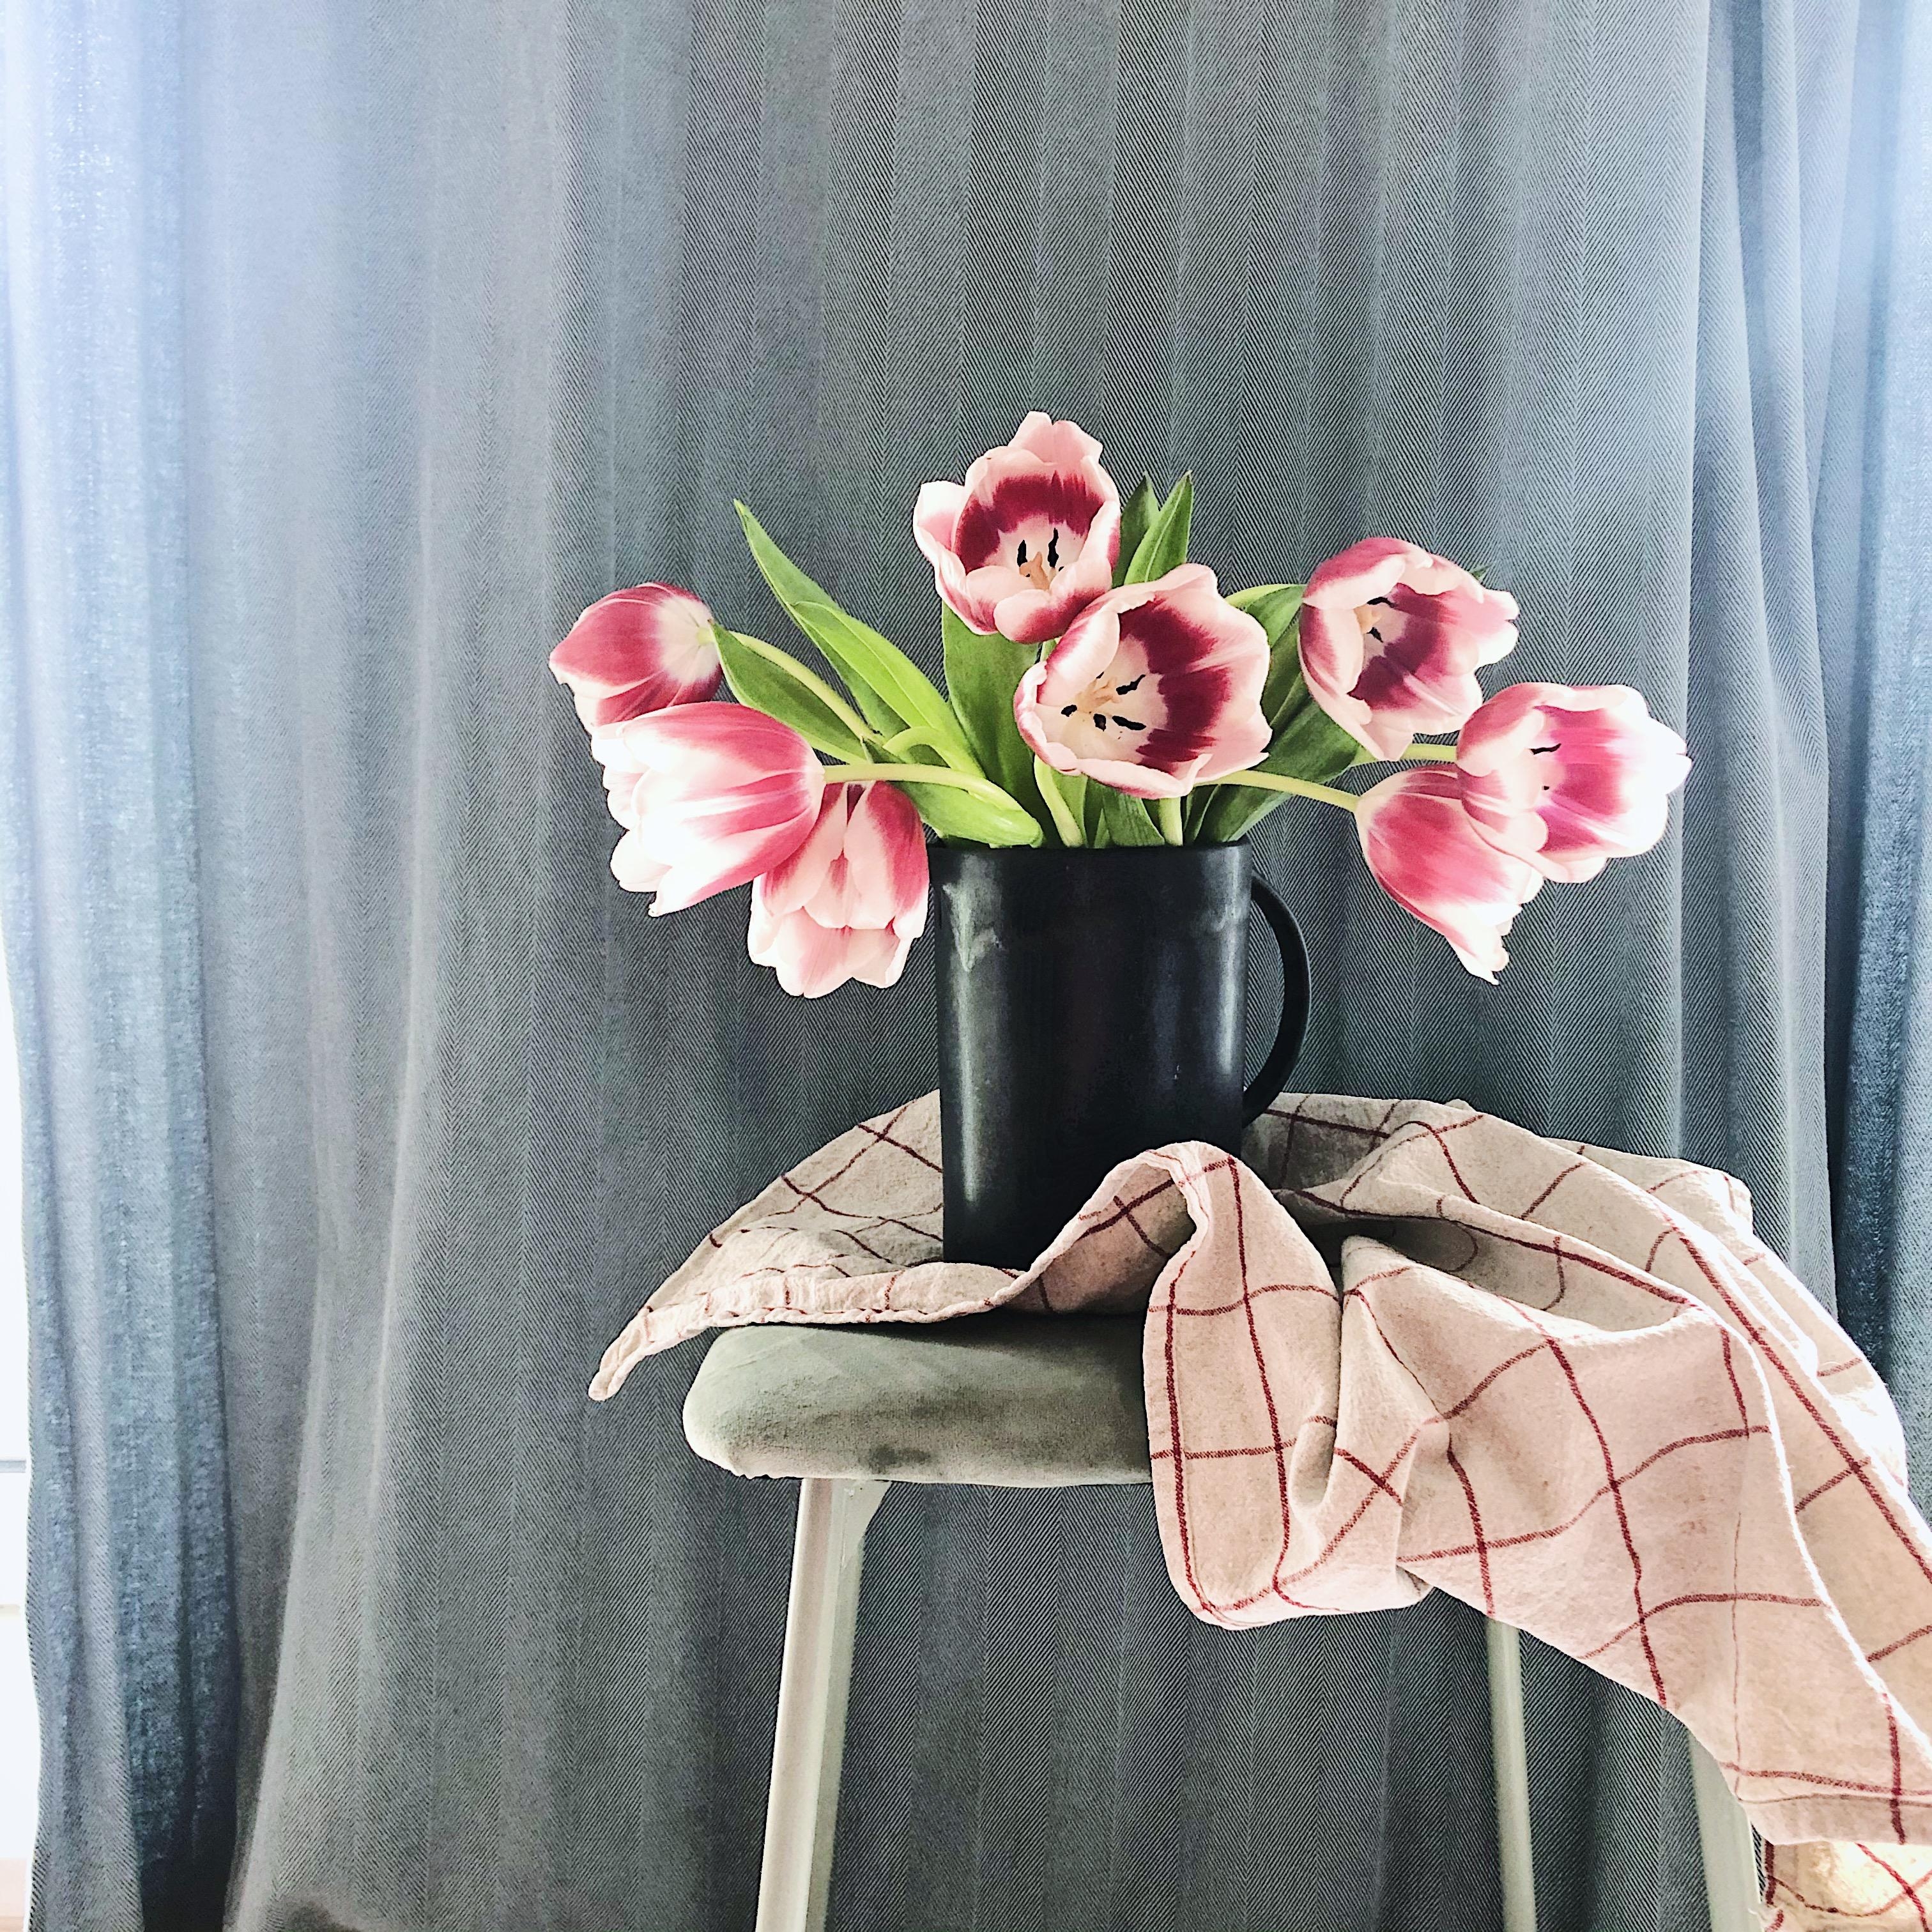 Falls jemand fragt: ich wäre dann bereit für den Frühling.
#Tulpen #Blumen #Stillleben